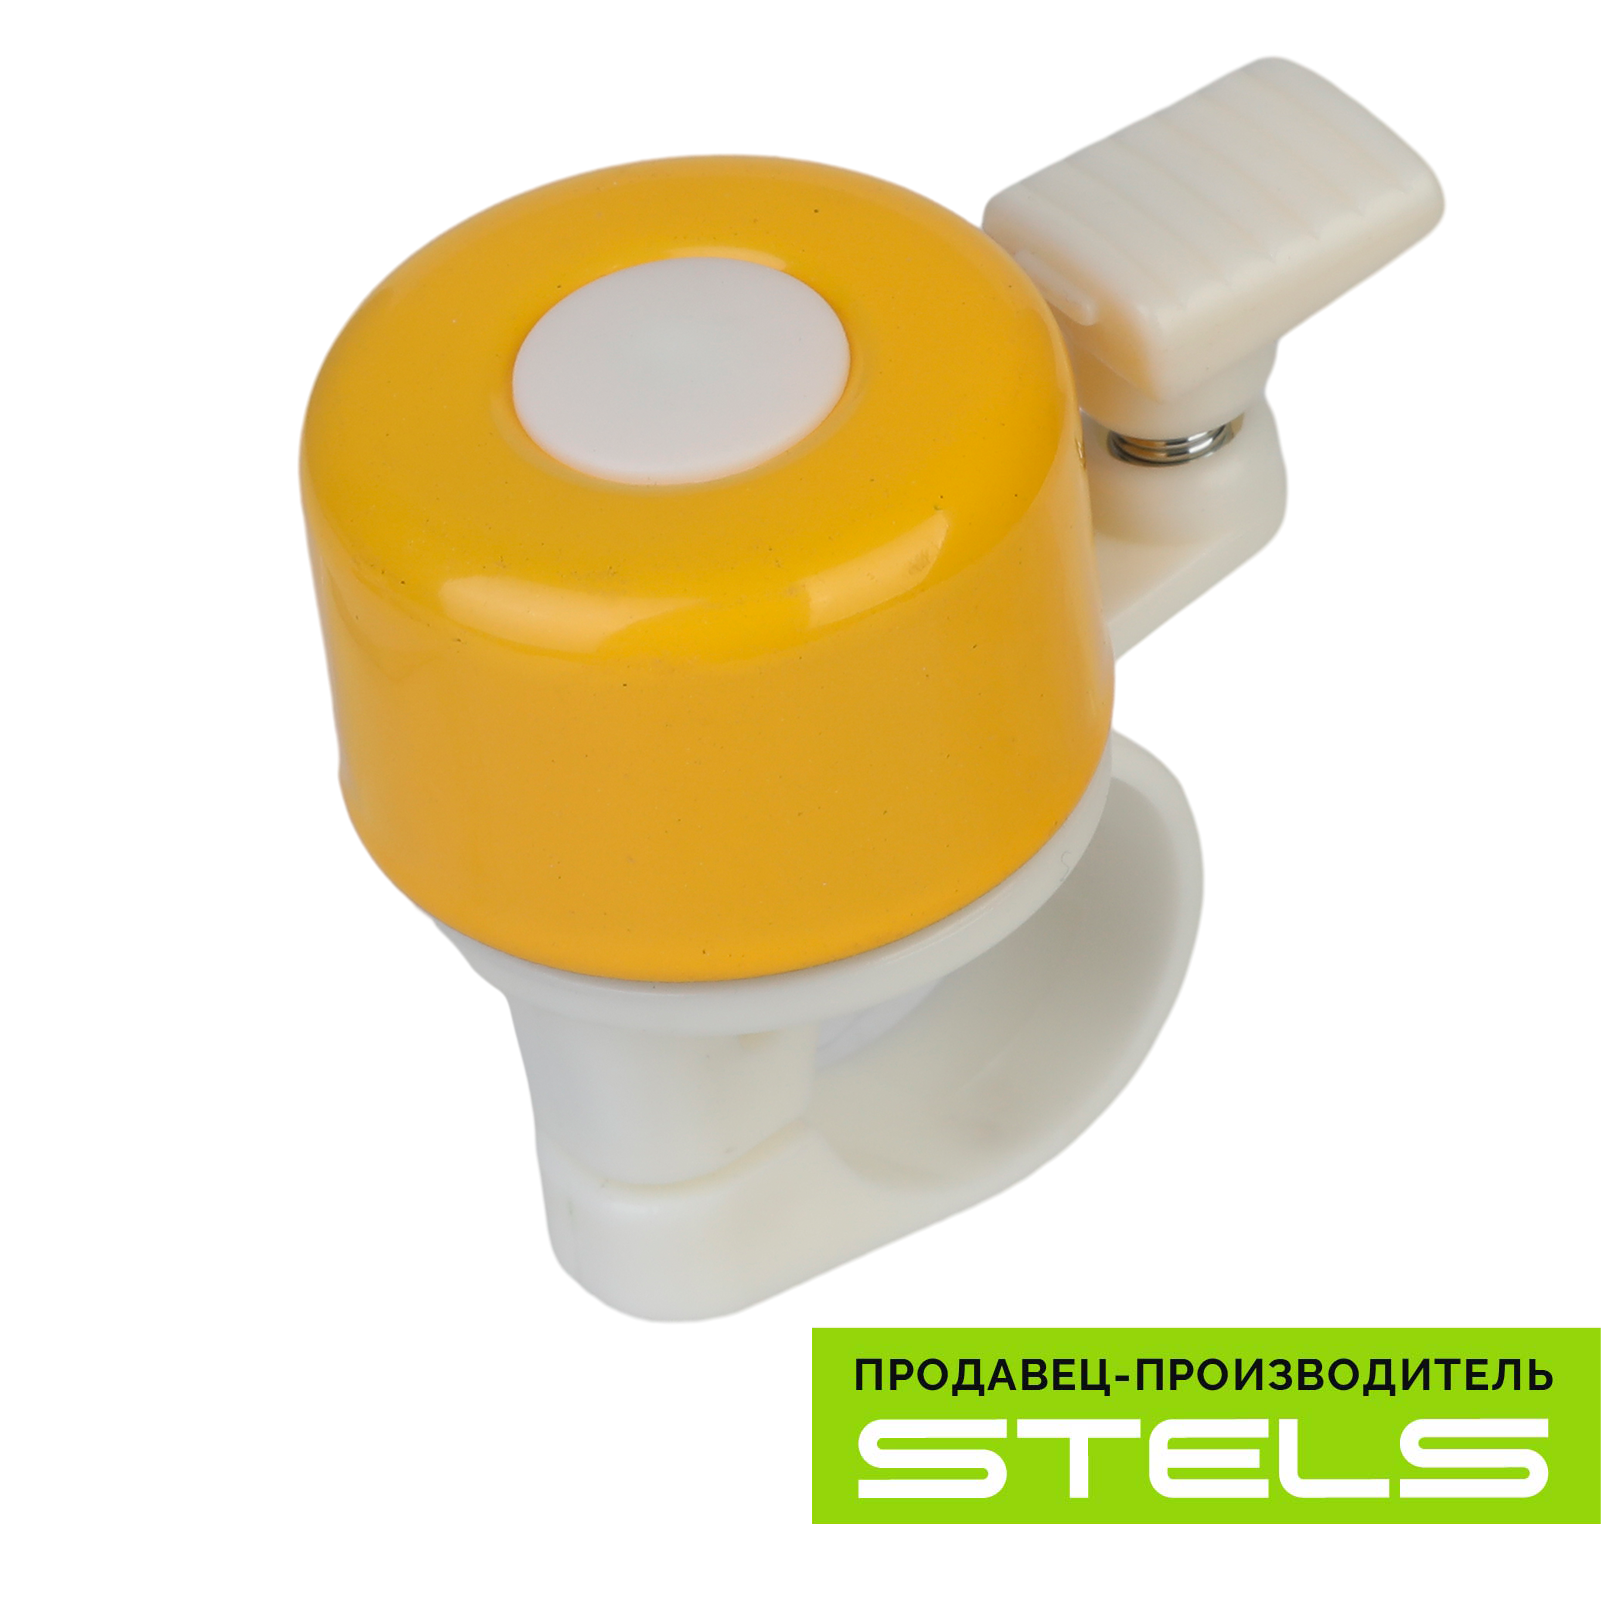 Звонок для велосипеда STELS 11P-05 сталь/пластик, бело-желтый (item:020)